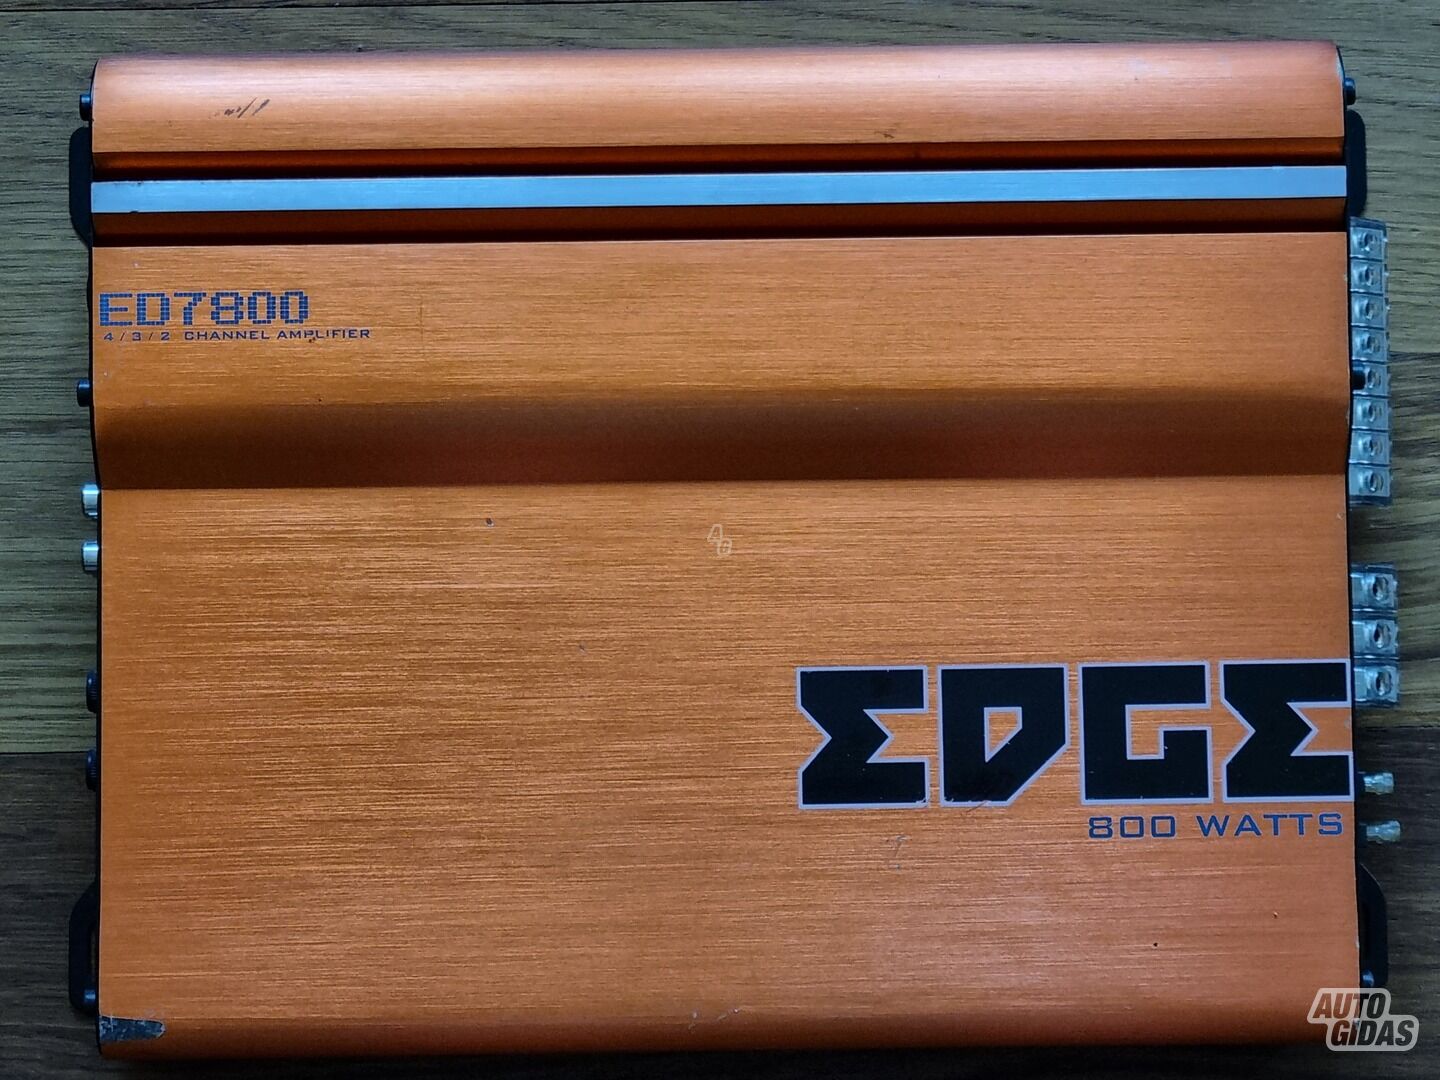 Edge ED7800 Audio Amplifier